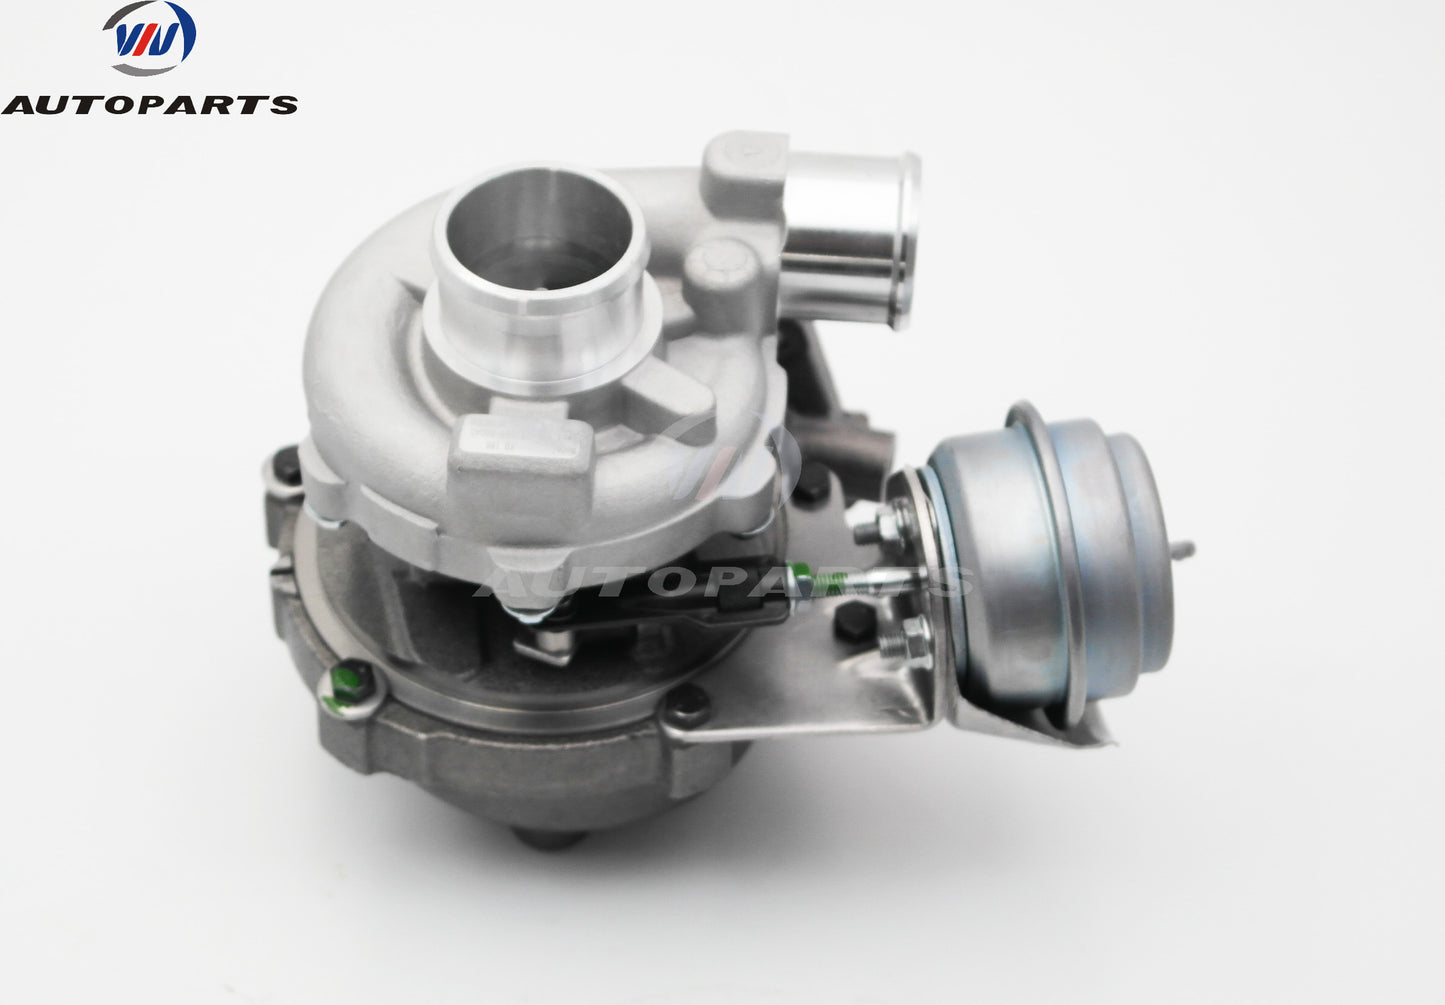 Turbocharger 757886-5003S for Hyundai Tucson, Kia Sportage 2.0L Diesel Engine